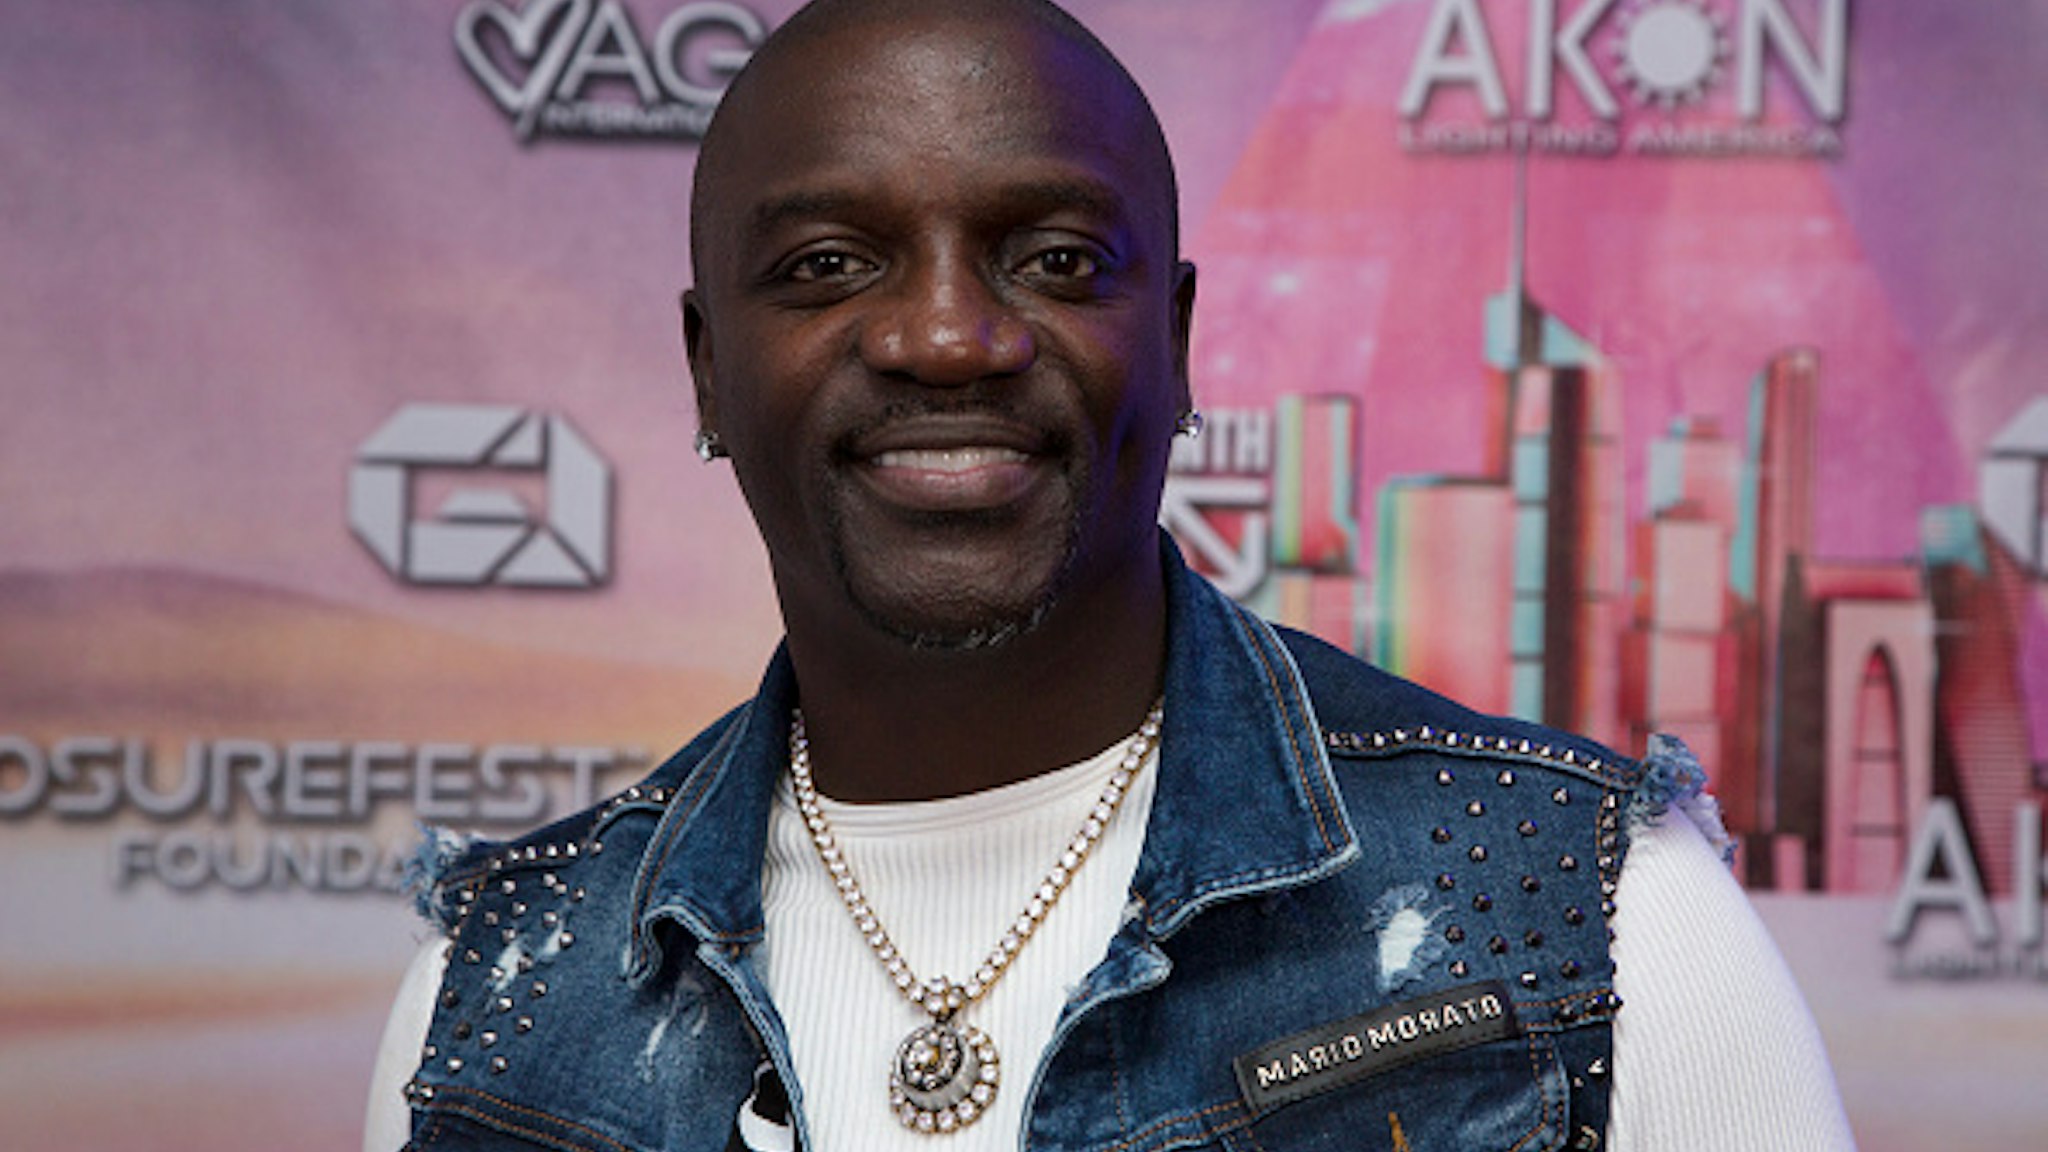 LOS ANGELES, CALIFORNIA - NOVEMBER 15: Akon attends the Akon Lighting LA - Disclosure Festival at 3BLACKDOT on November 15, 2019 in Los Angeles, California.